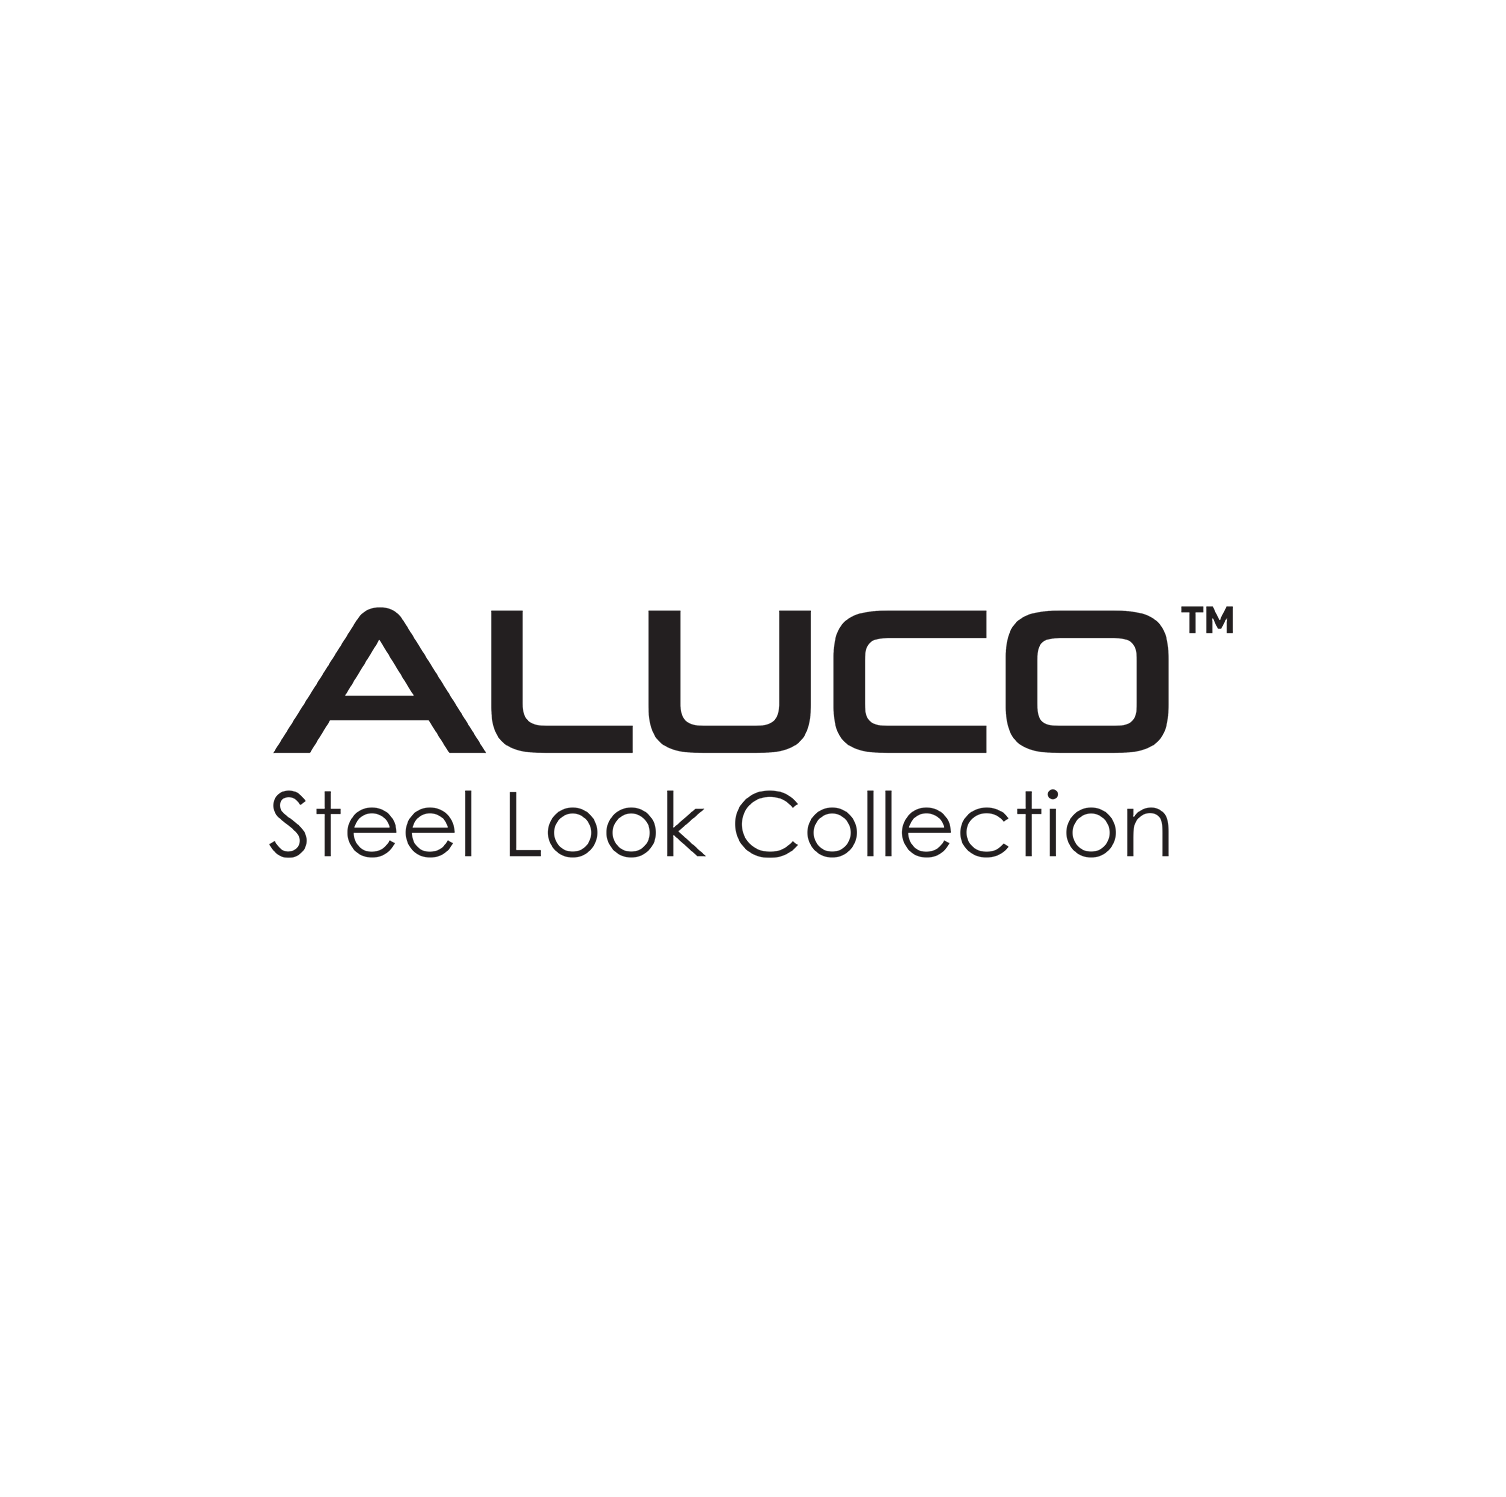 Aluco Steel Look Logo